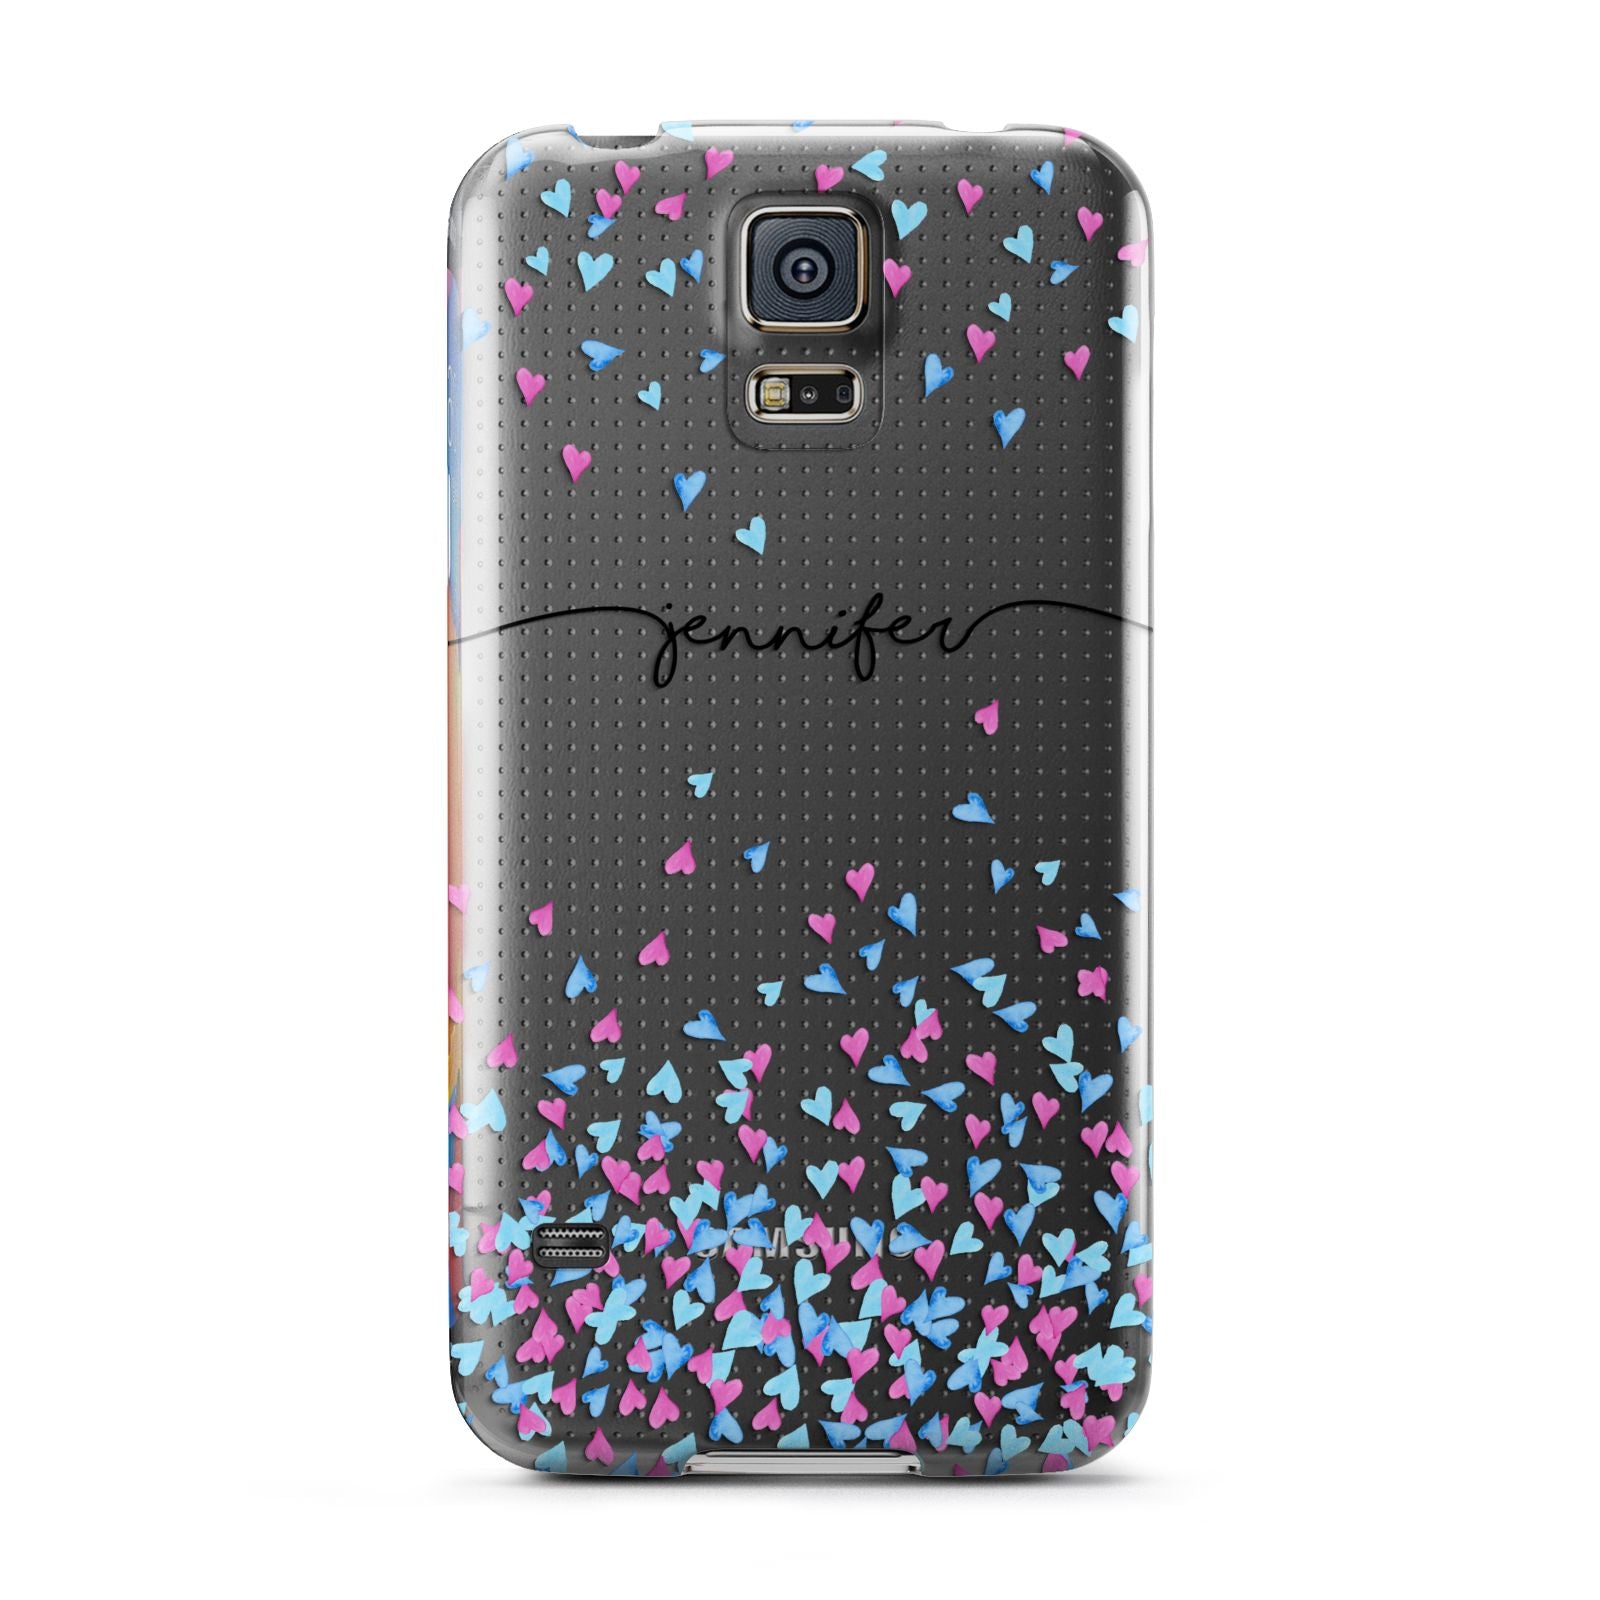 Personalised Confetti Hearts Samsung Galaxy S5 Case